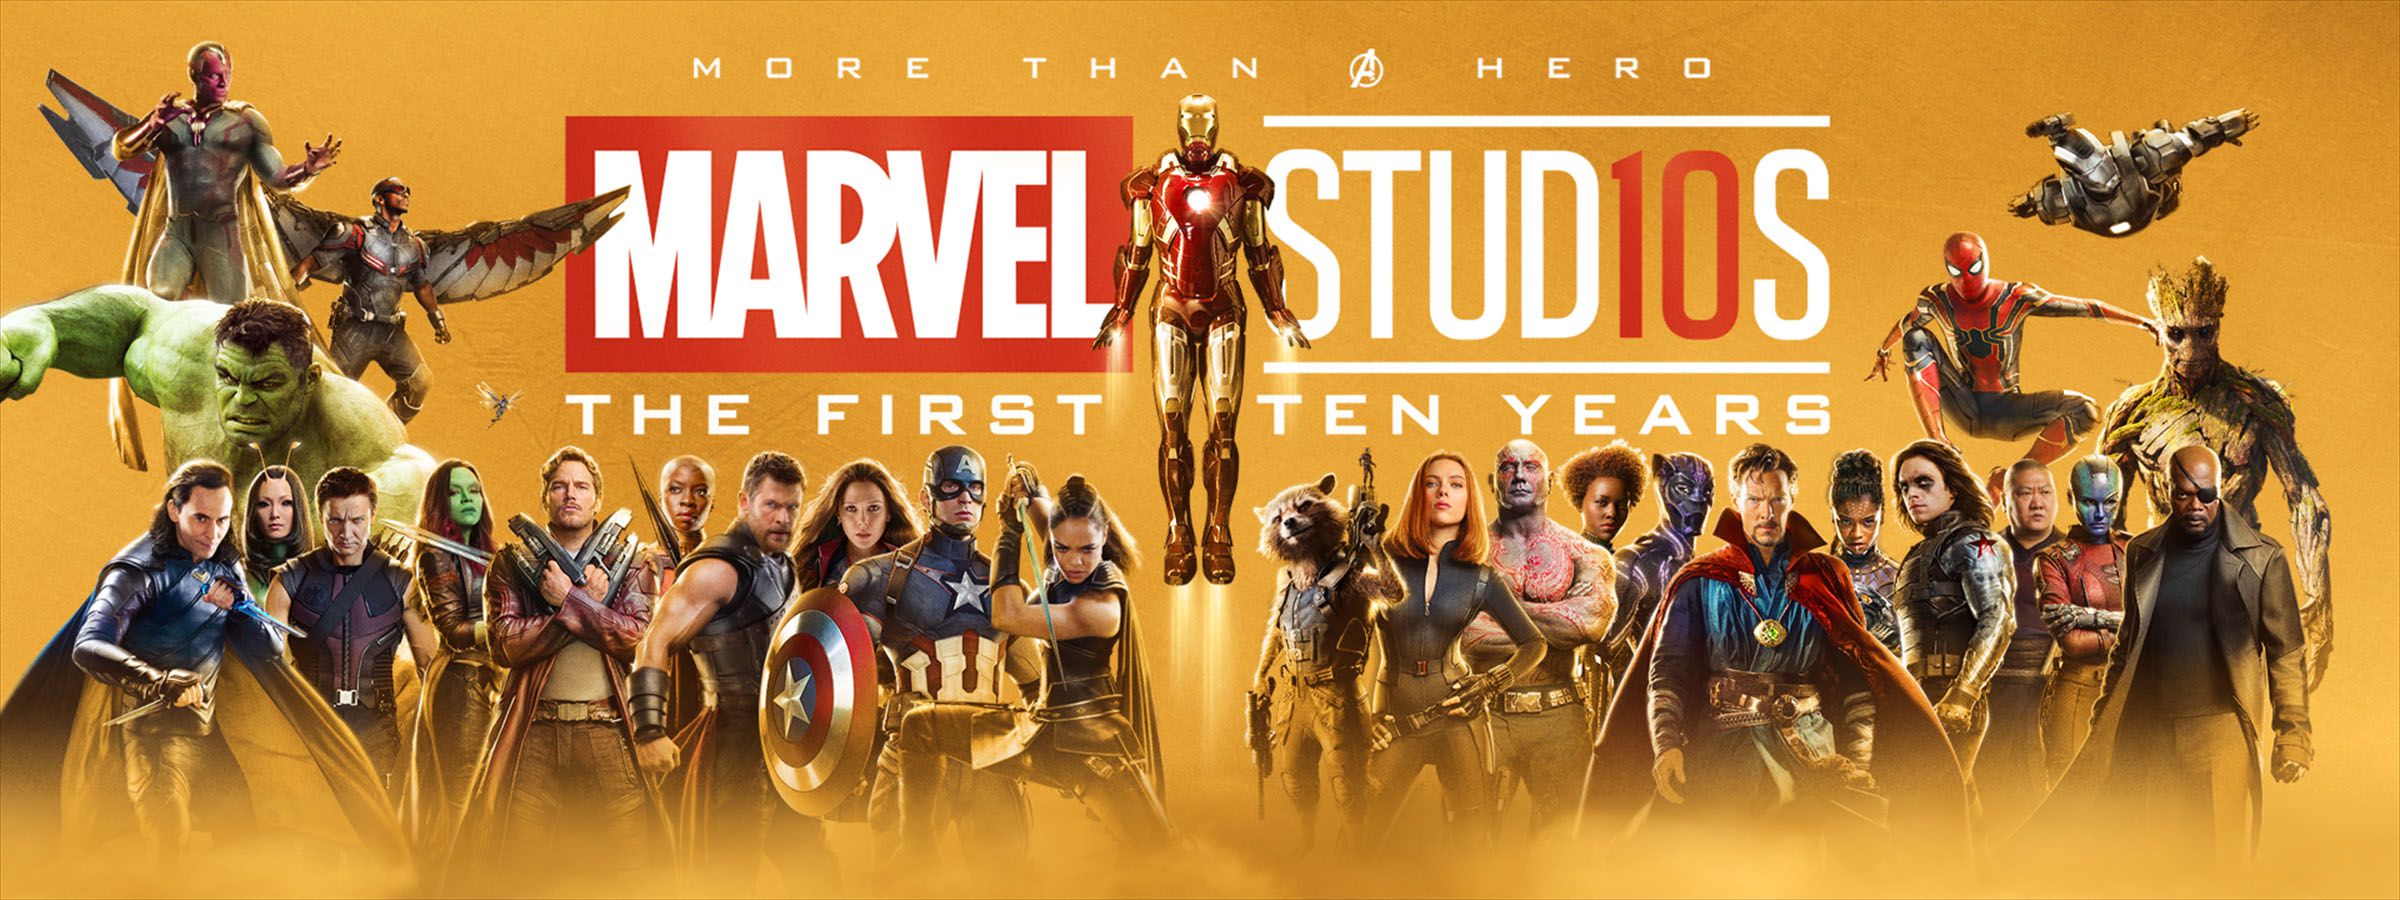 Orden películas Marvel | Poster promocional